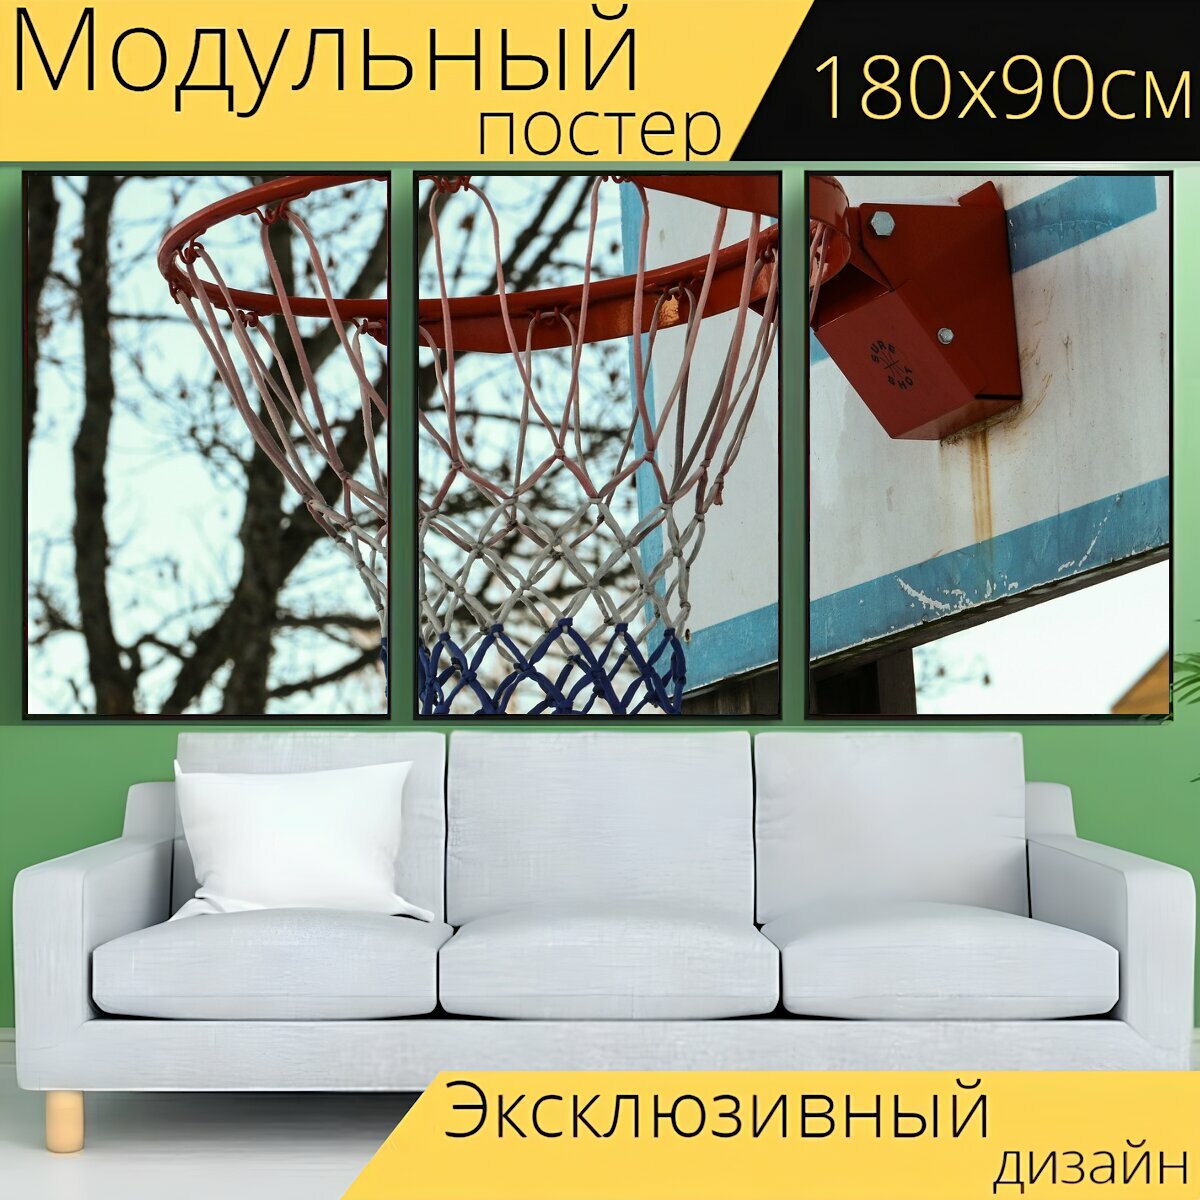 Модульный постер "Корзина, баскетбол, спорт" 180 x 90 см. для интерьера